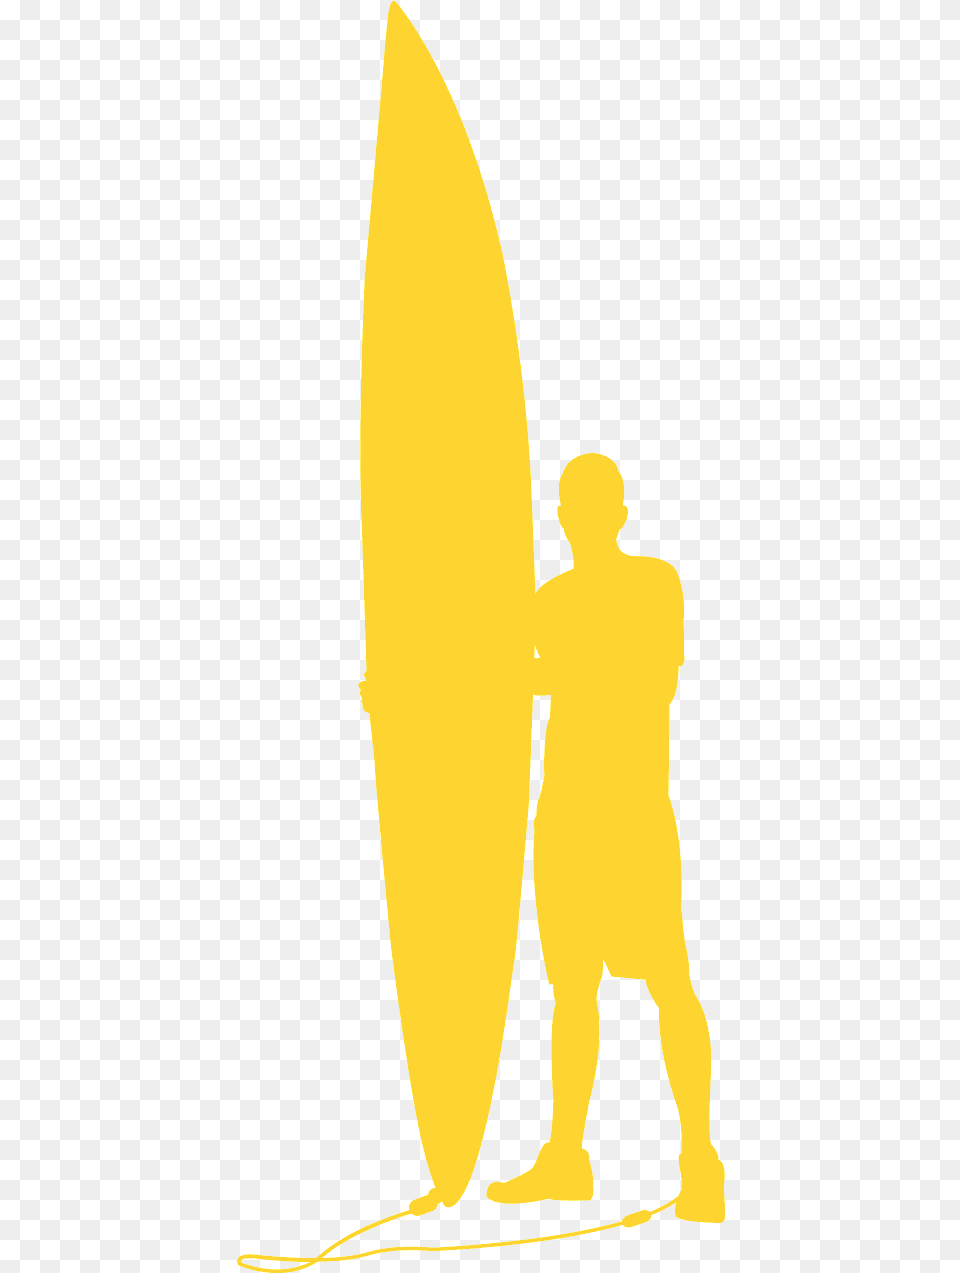 Surfboard, Water, Surfing, Sport, Sea Waves Png Image